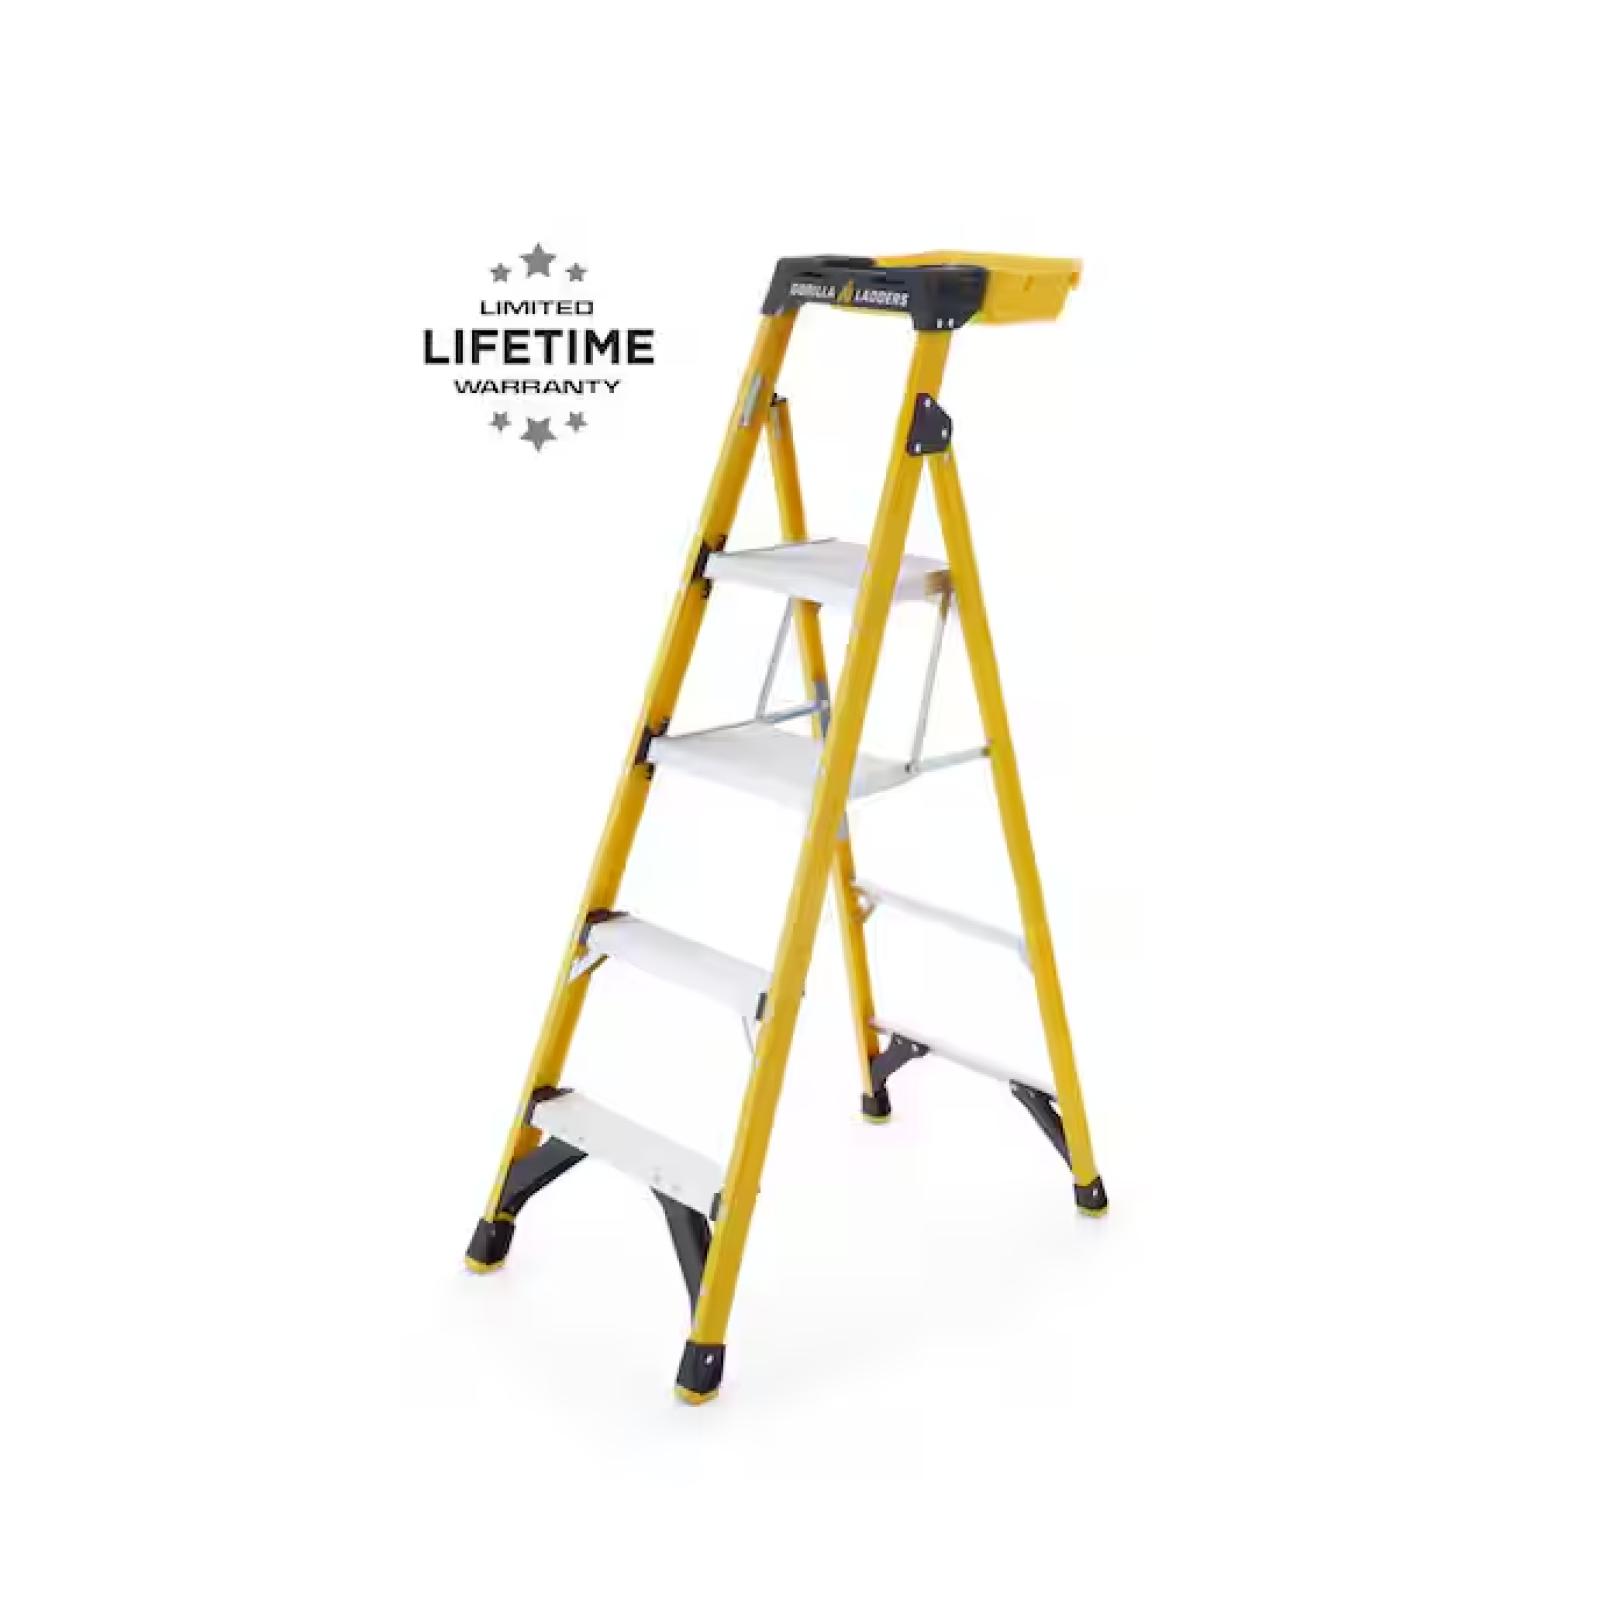 NEW!- Gorilla Ladders 5.5 ft. (10 ft. Reach) Fiberglass Dual Platform Ladder, XL Steps, Removable Project Bucket, 300 lbs. Capacity -(2 UNITS)